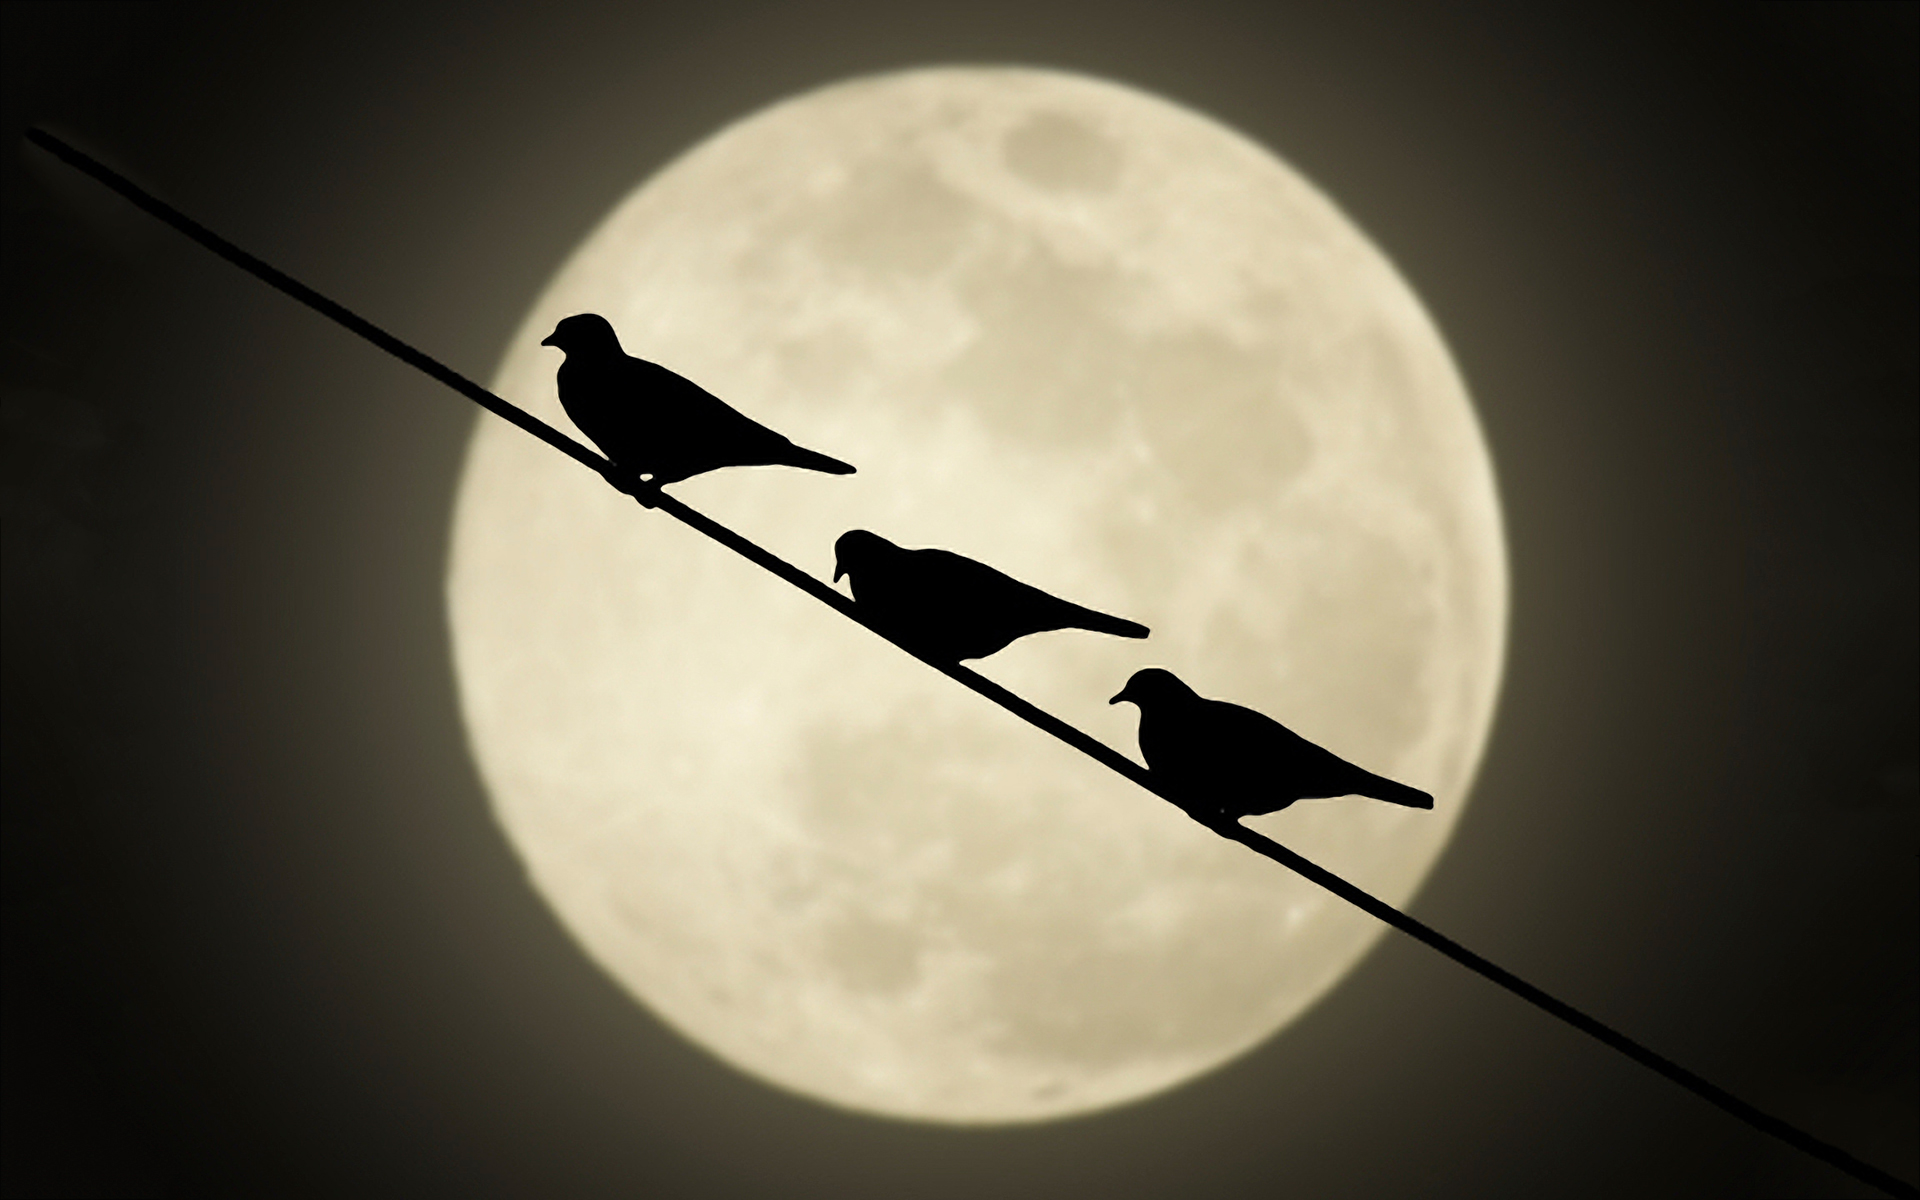 Moon birds